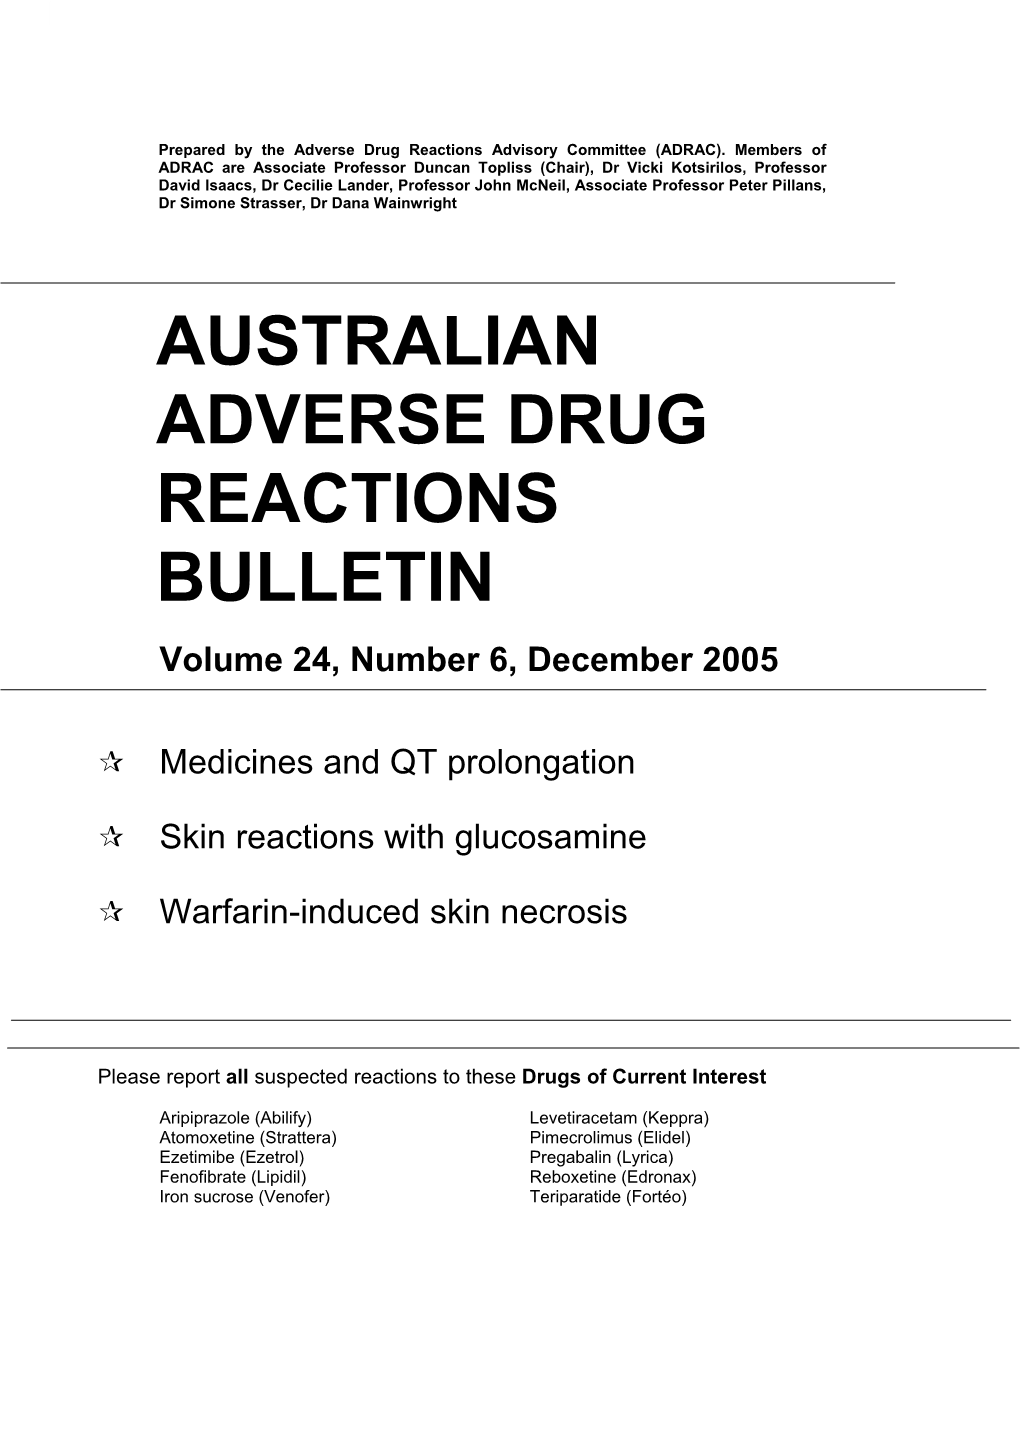 Australian Adverse Drug Reactions Bulletin, Volume 24 No 6